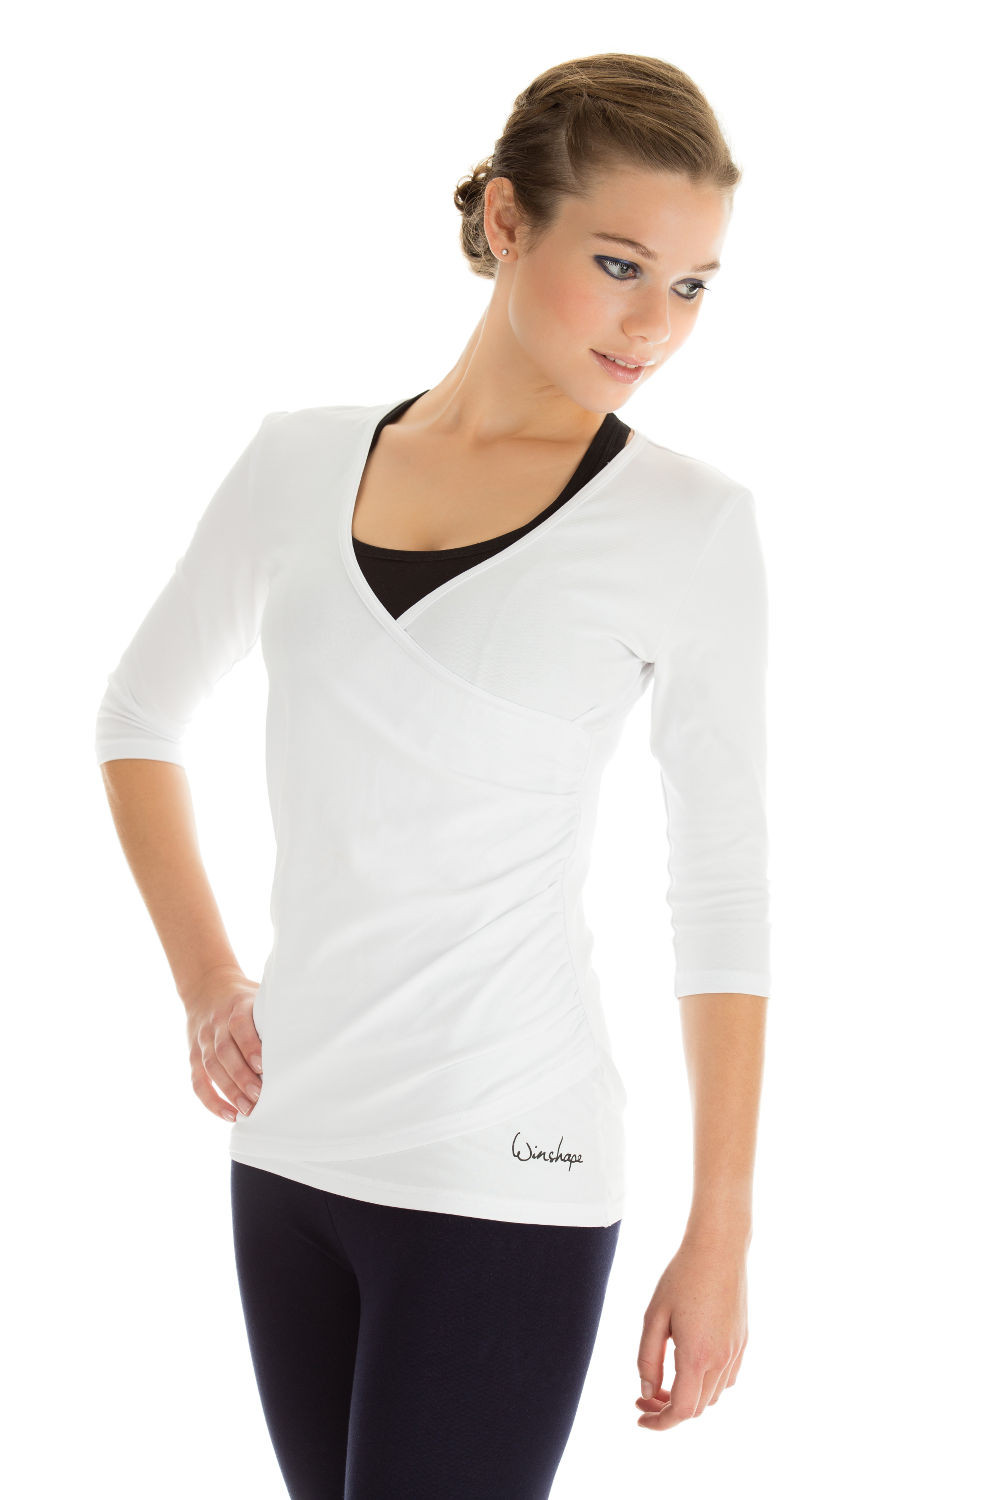 ¾-Arm Shirt in Style weiß, WS3, Winshape Wickeloptik Flow